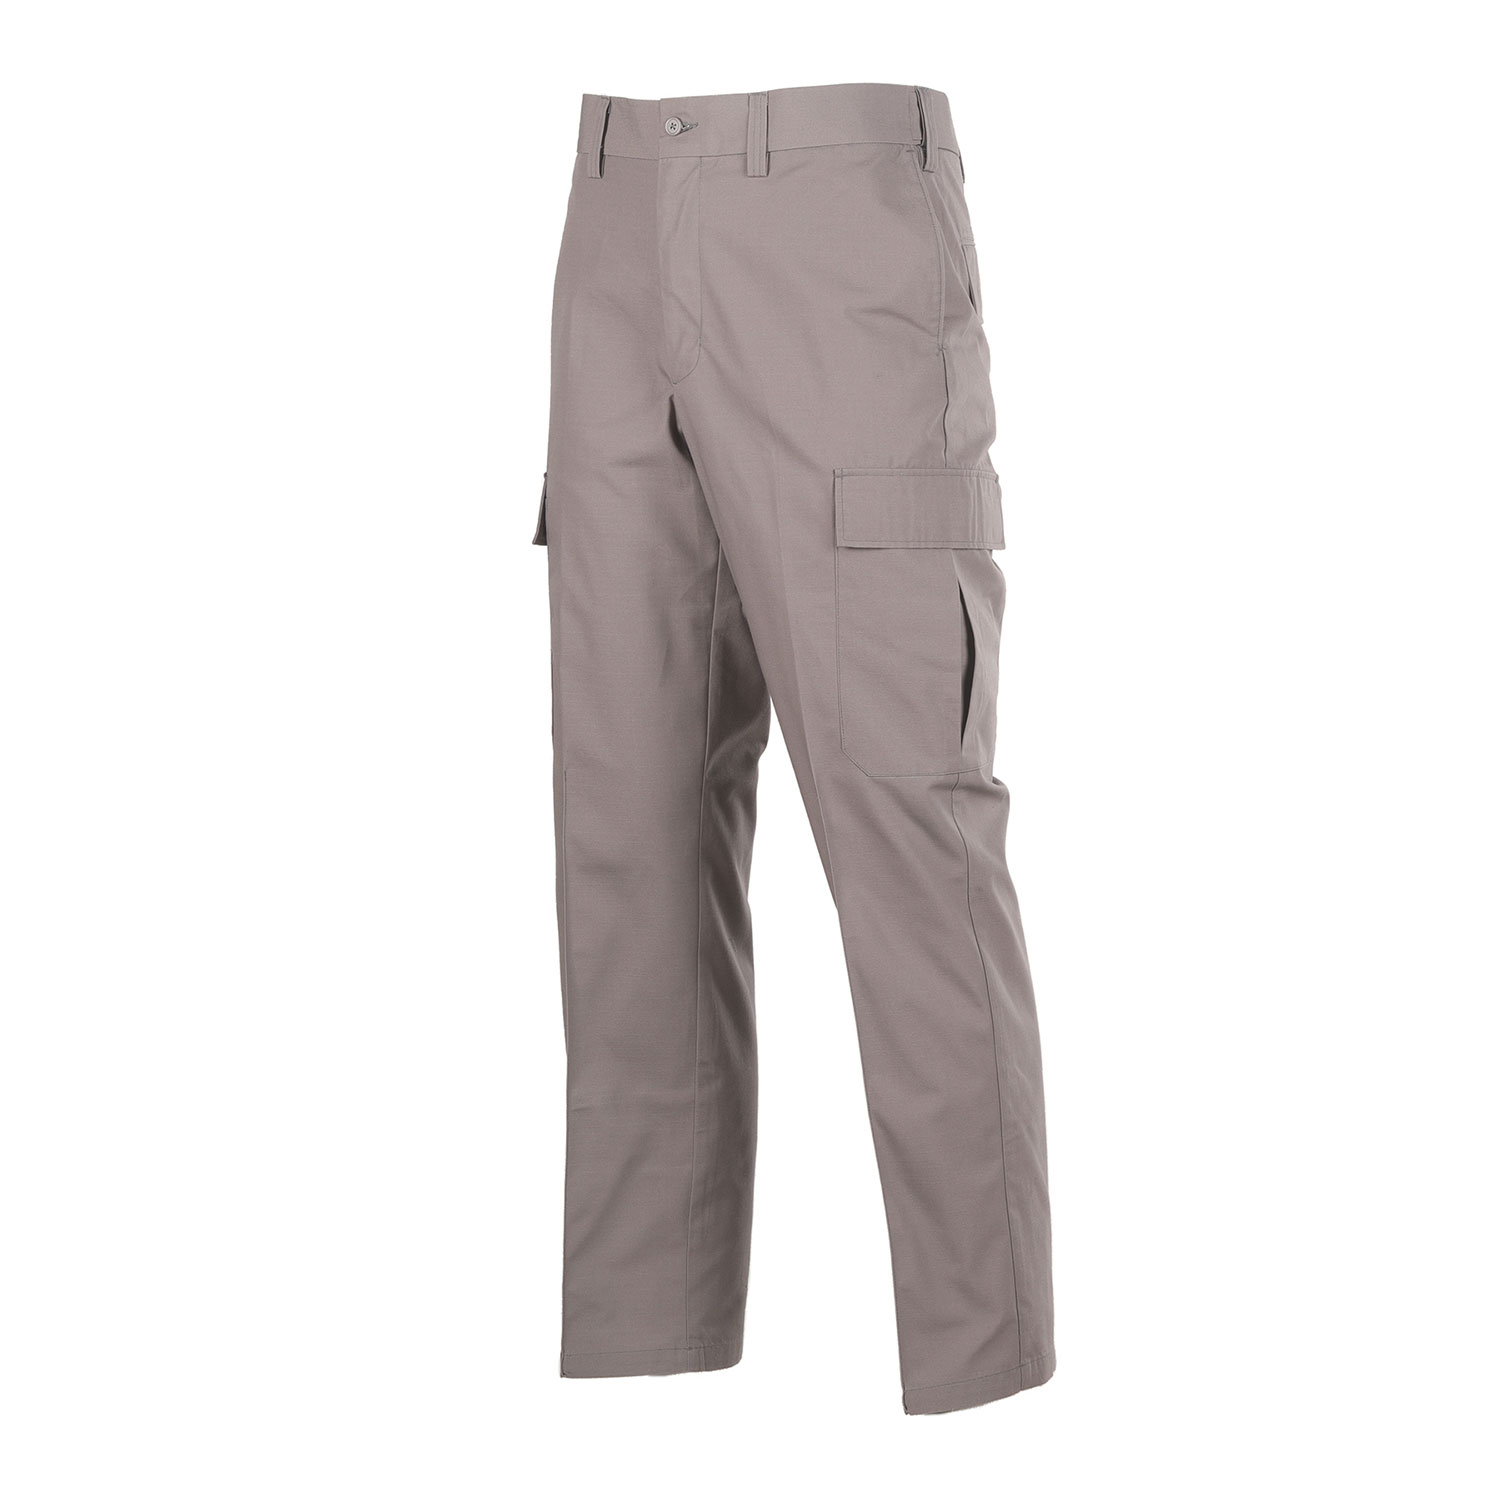 Galls FBOP Men's Utility Uniform Trousers (Nickel Gray)